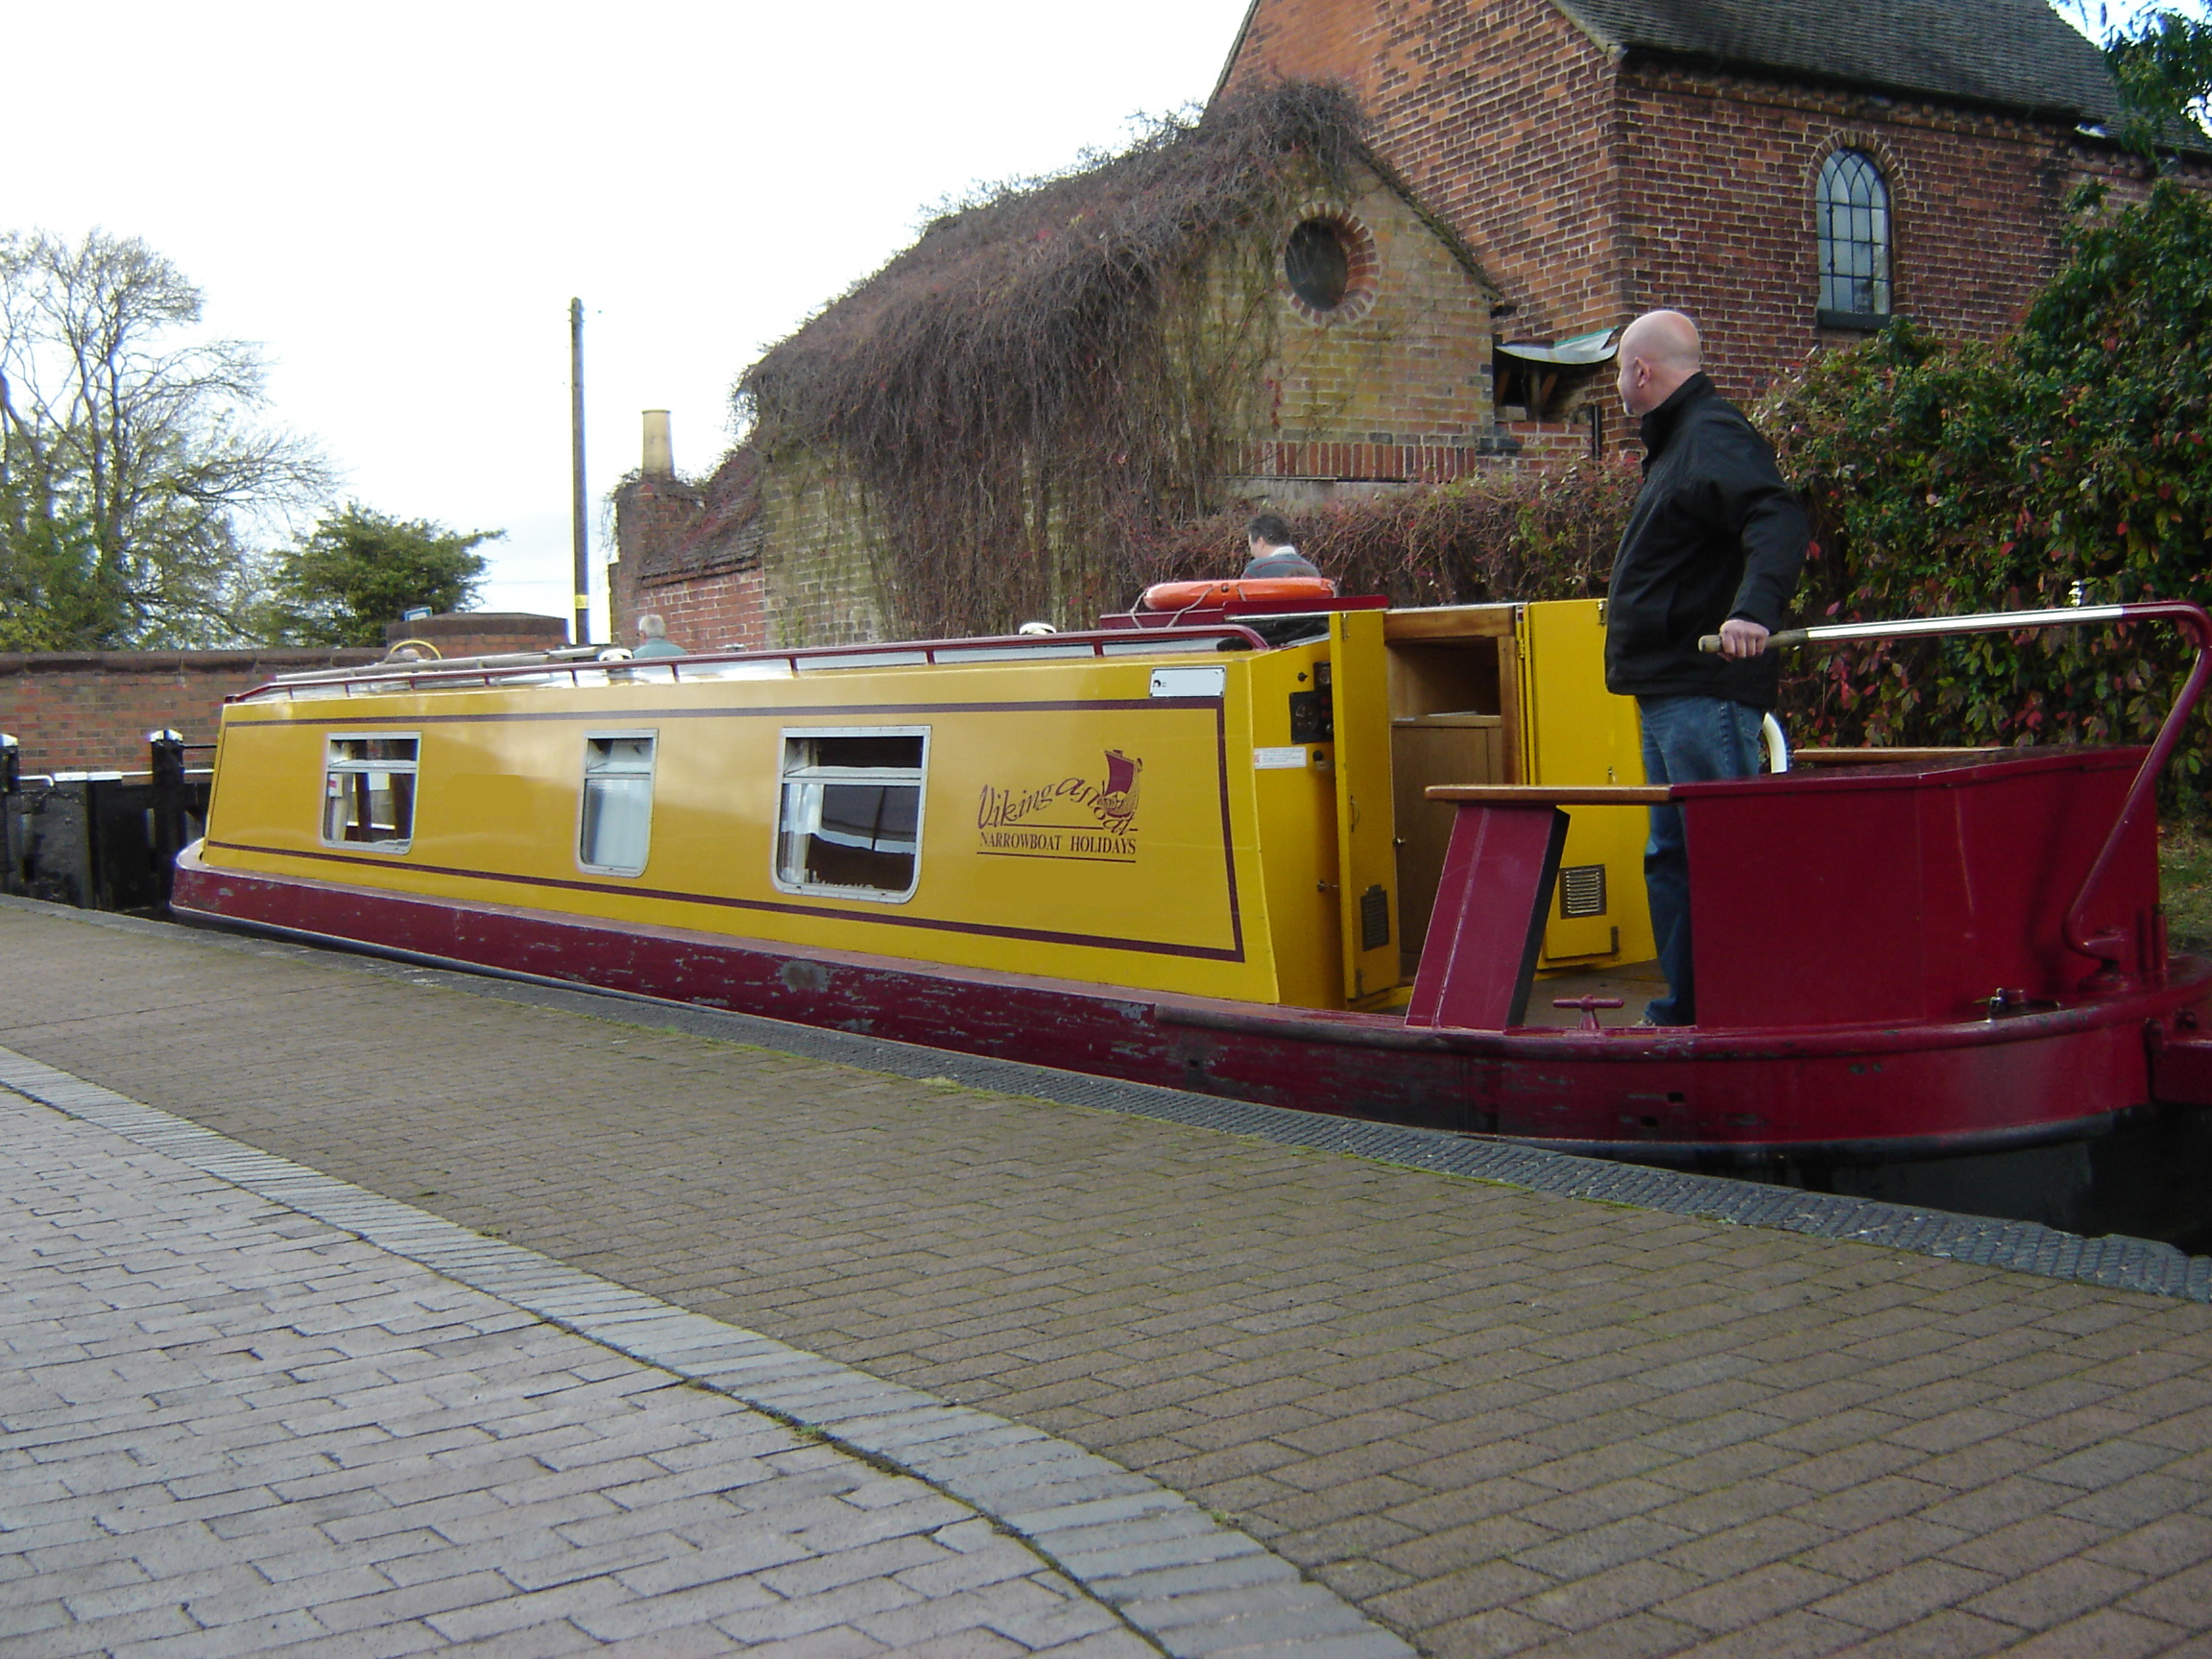 The Nene class canal boat